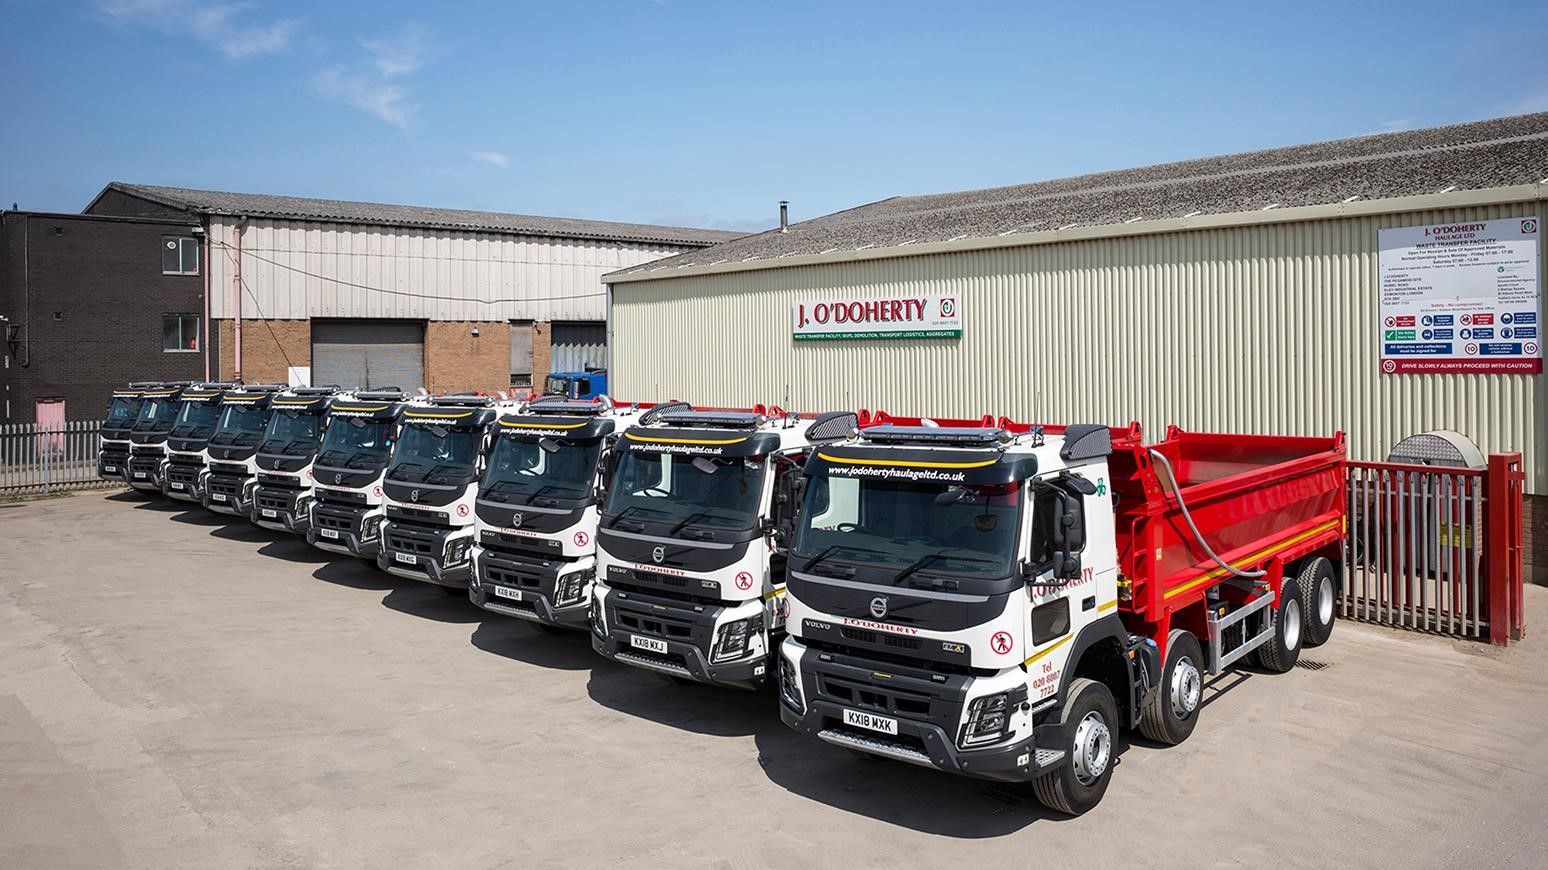 J. O’Doherty Haulage Adds 10 FMX 420 8x4 Tipper Trucks To Its Fleet